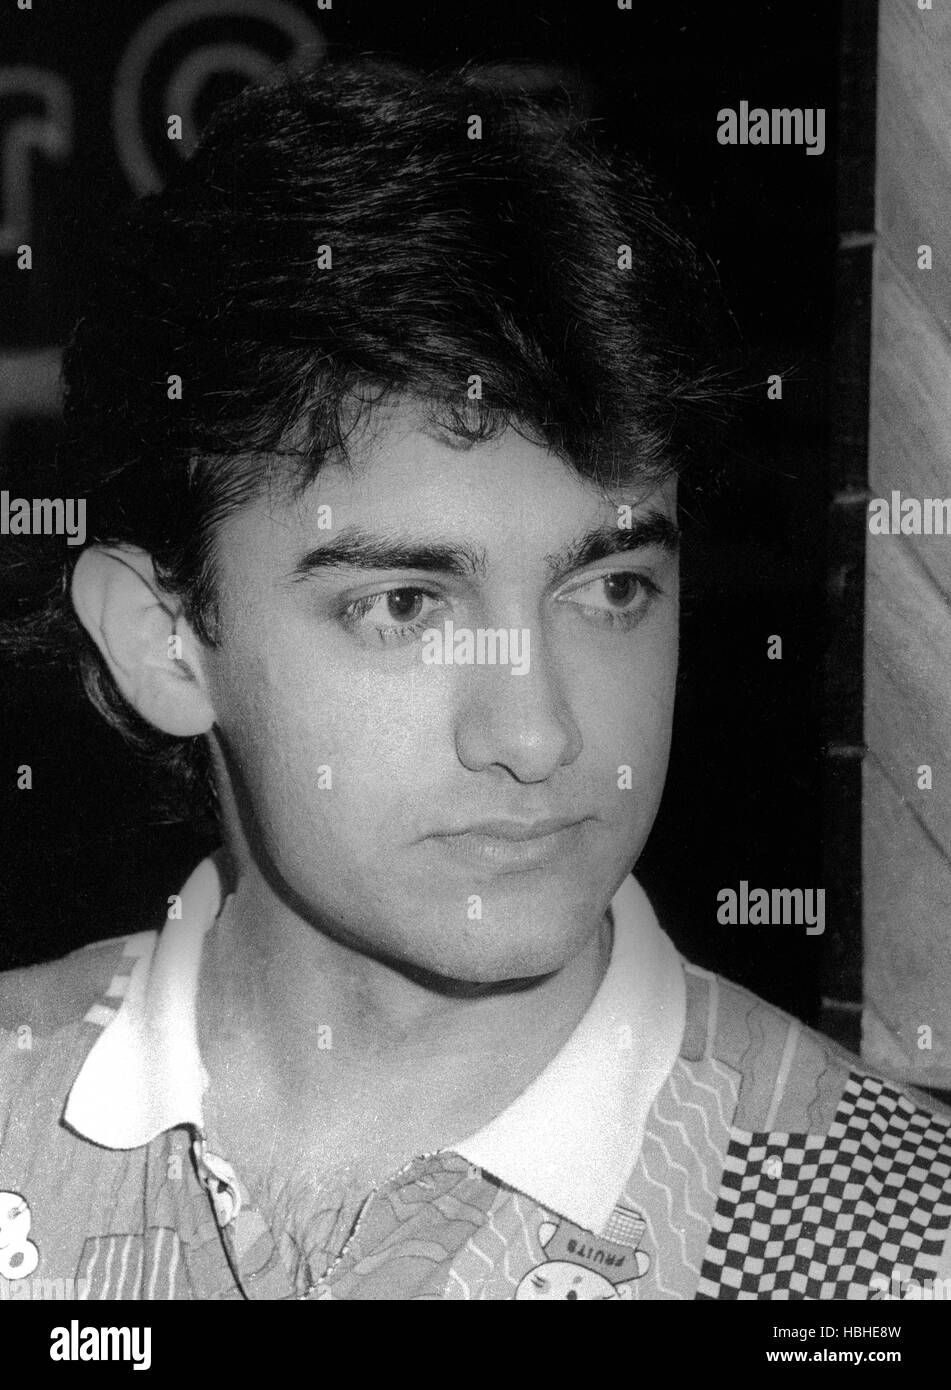 Attore di Bollywood AAMIR KHAN come si vede in questo 1989 foto, in Mumbai, India. Foto Stock